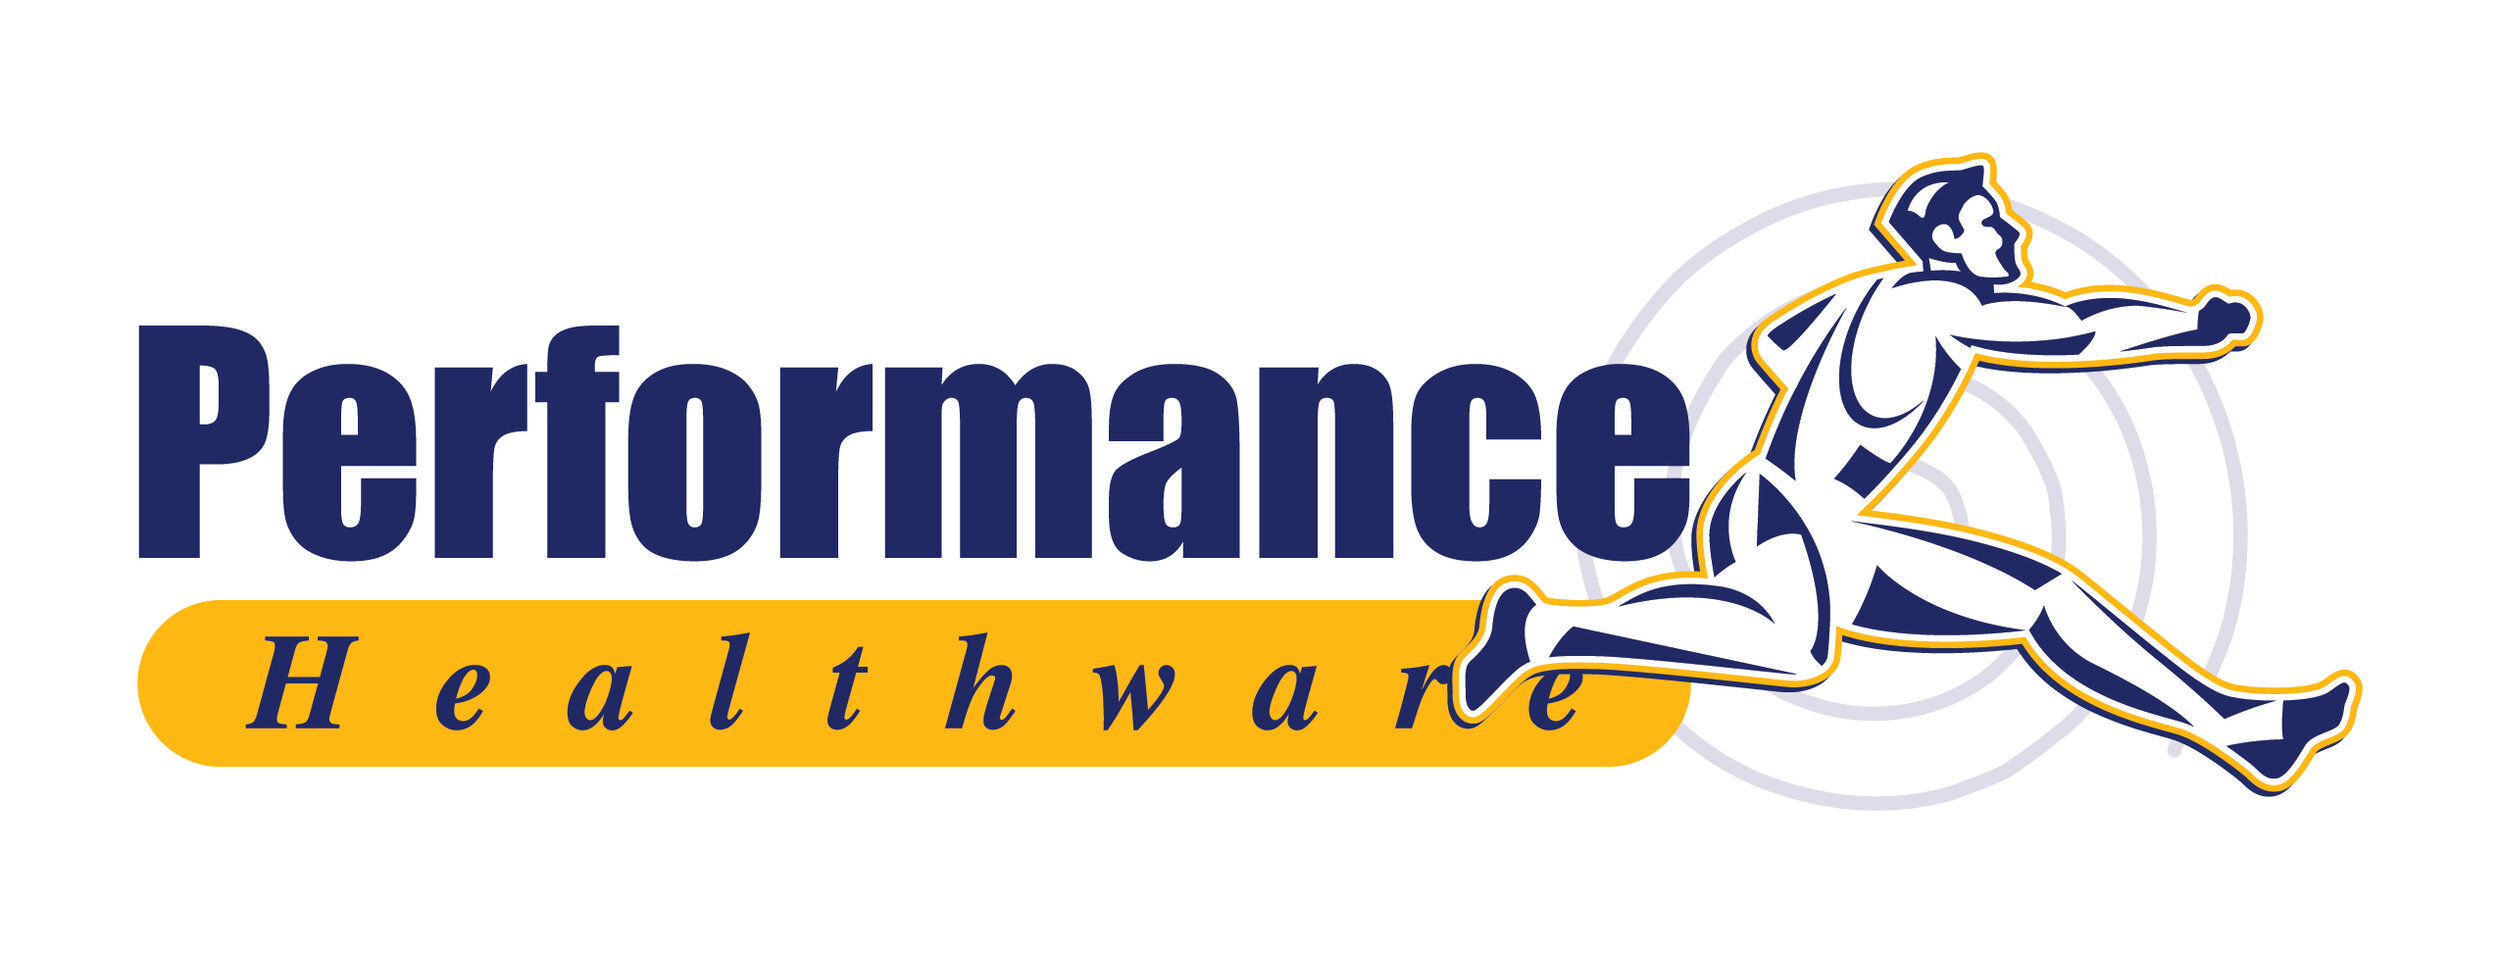 Performance Healthware Logo DK blue yellow-01.jpg